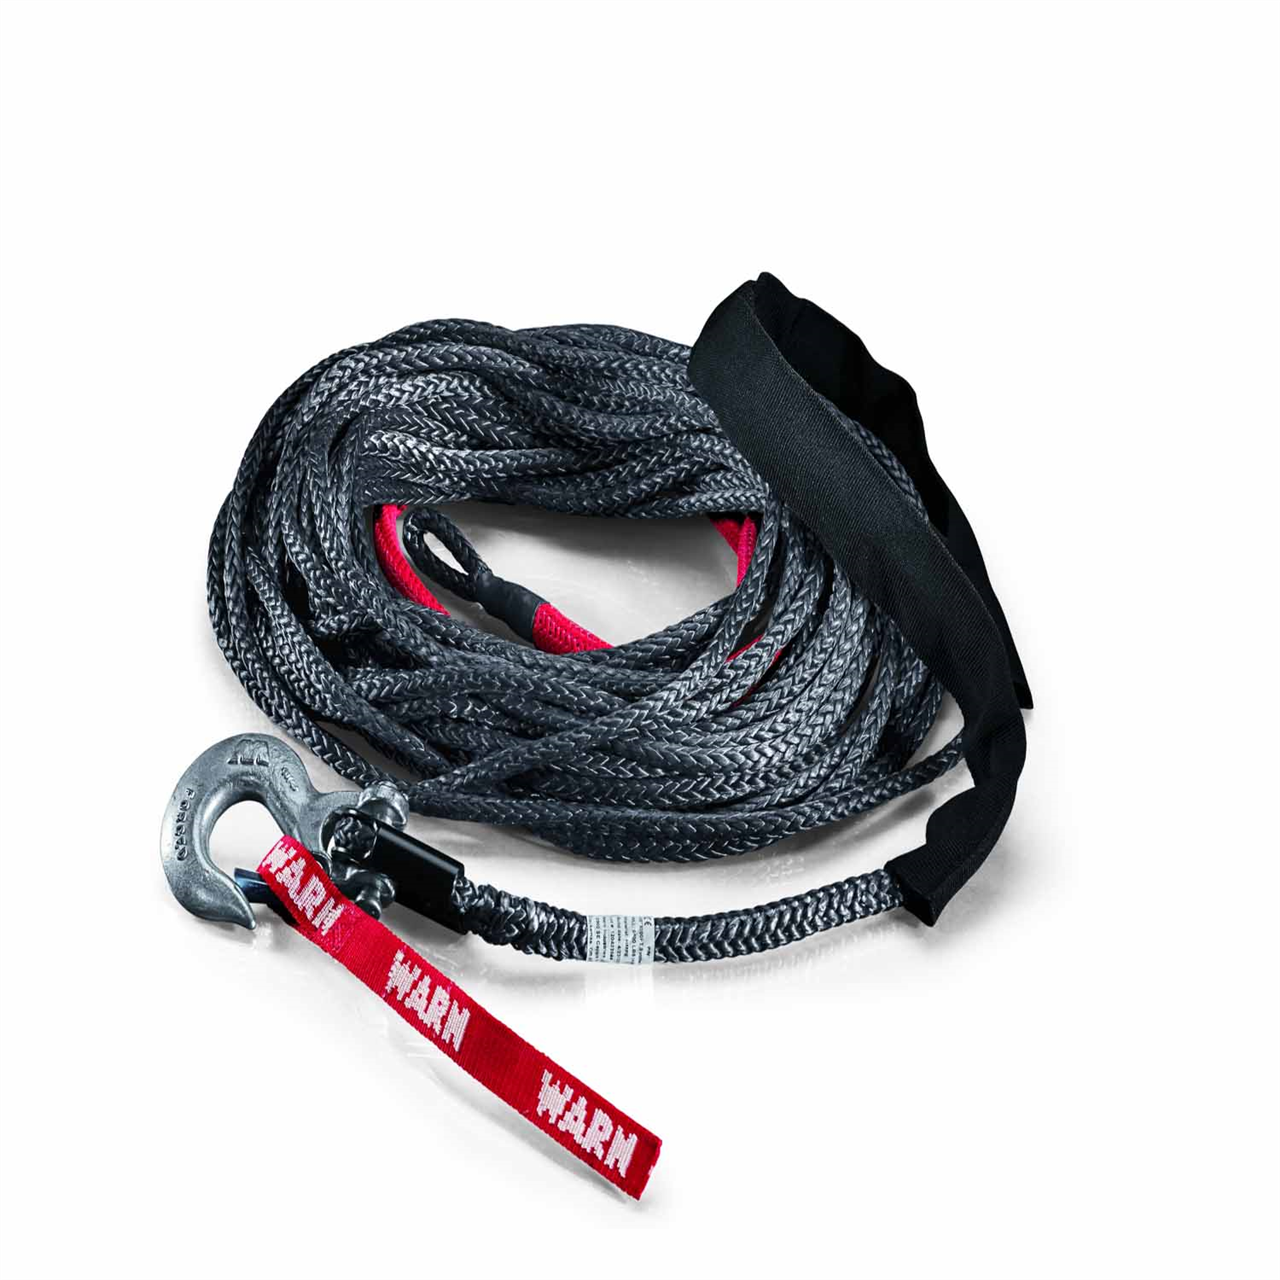 Warn synthetic rope kit 3/8x80 - Summit 4x4 Company